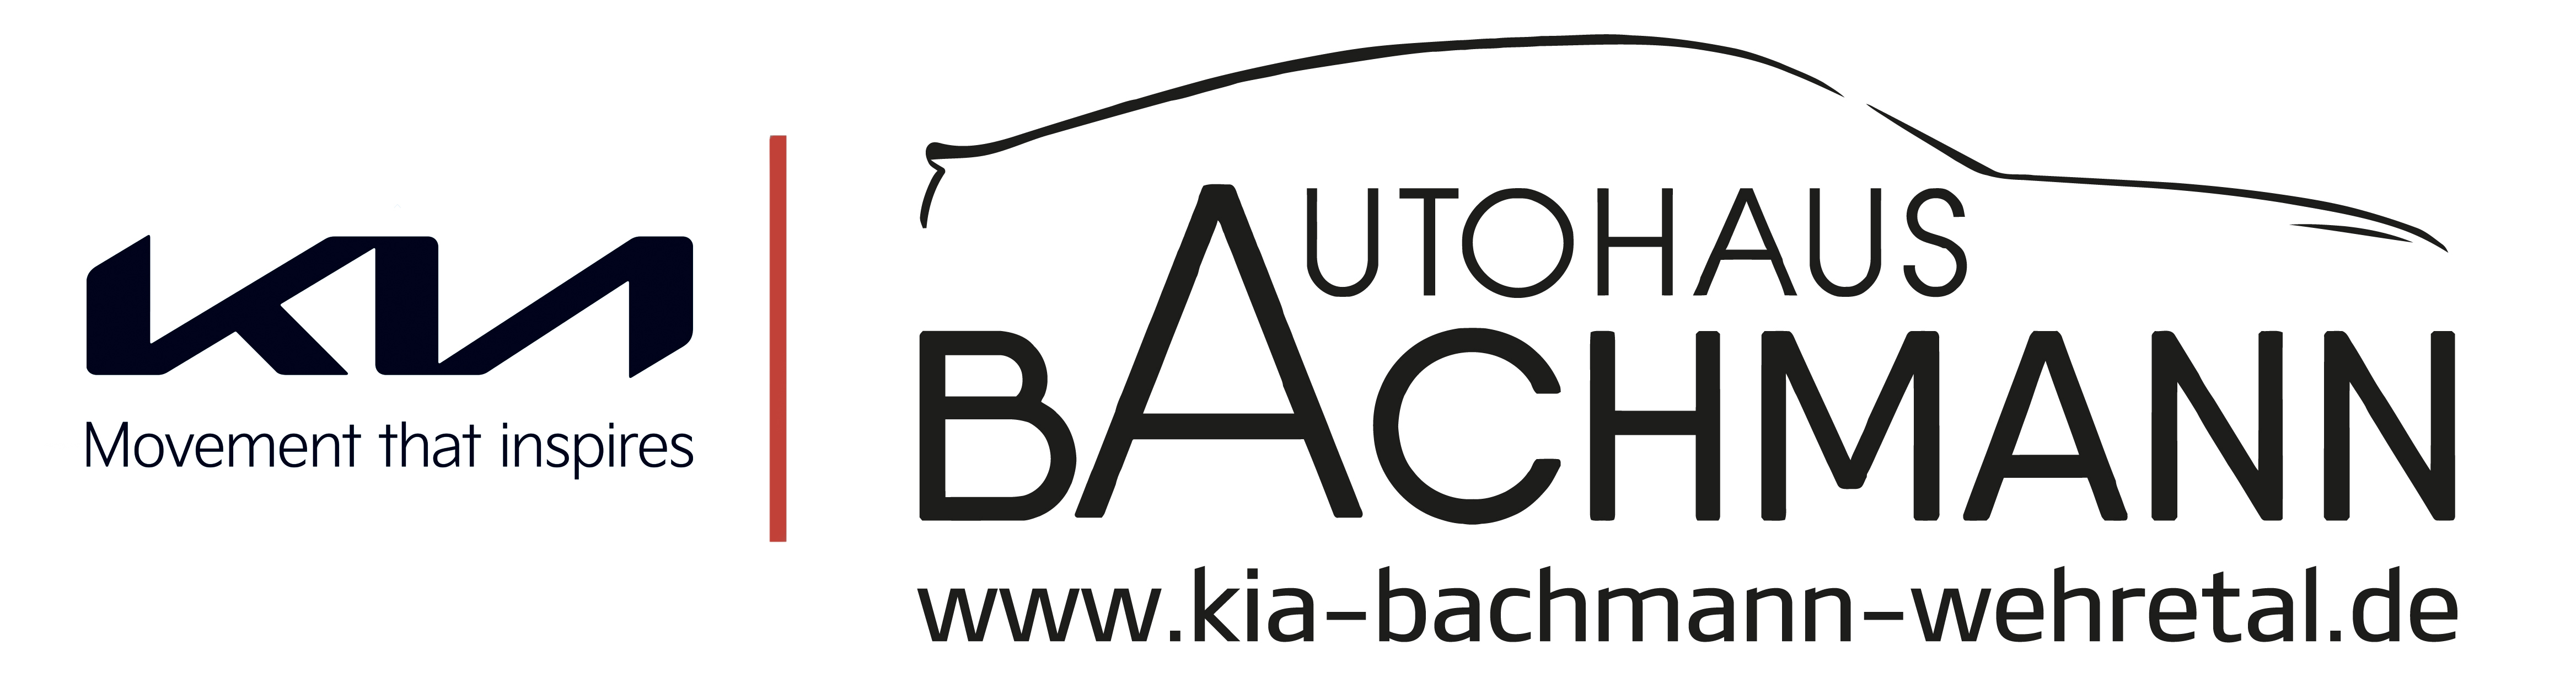 Autohaus Bachmann